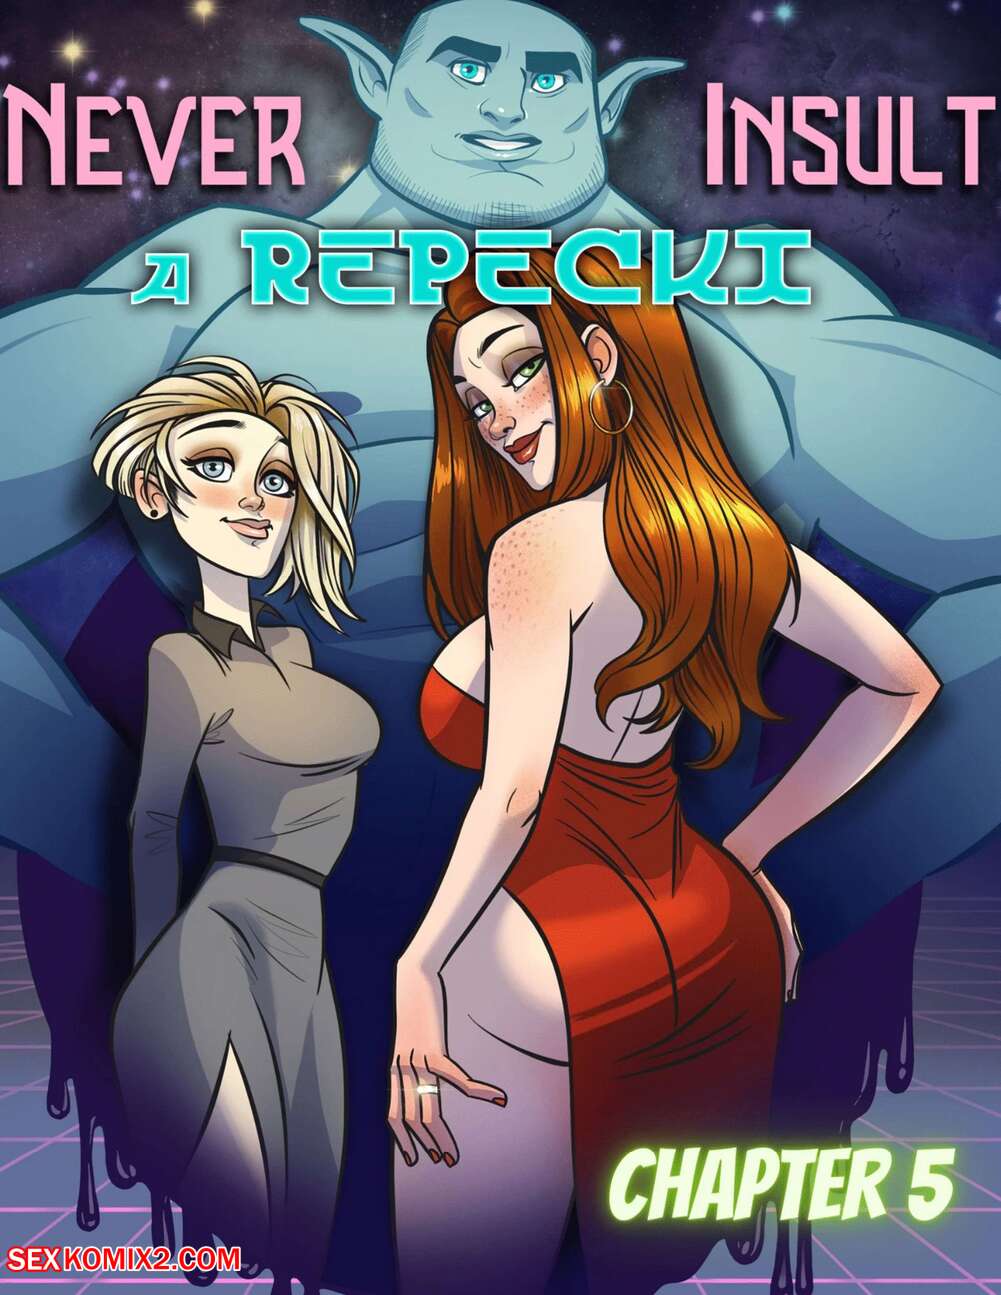 Sexy Animated Porn Comics - âœ…ï¸ Porn comic Never Insult a Repecki. Chapter 5. Nick Eronic. Sex comic sexy  babes on âœ…ï¸ | | Porn comics hentai adult only | wporncomics.com